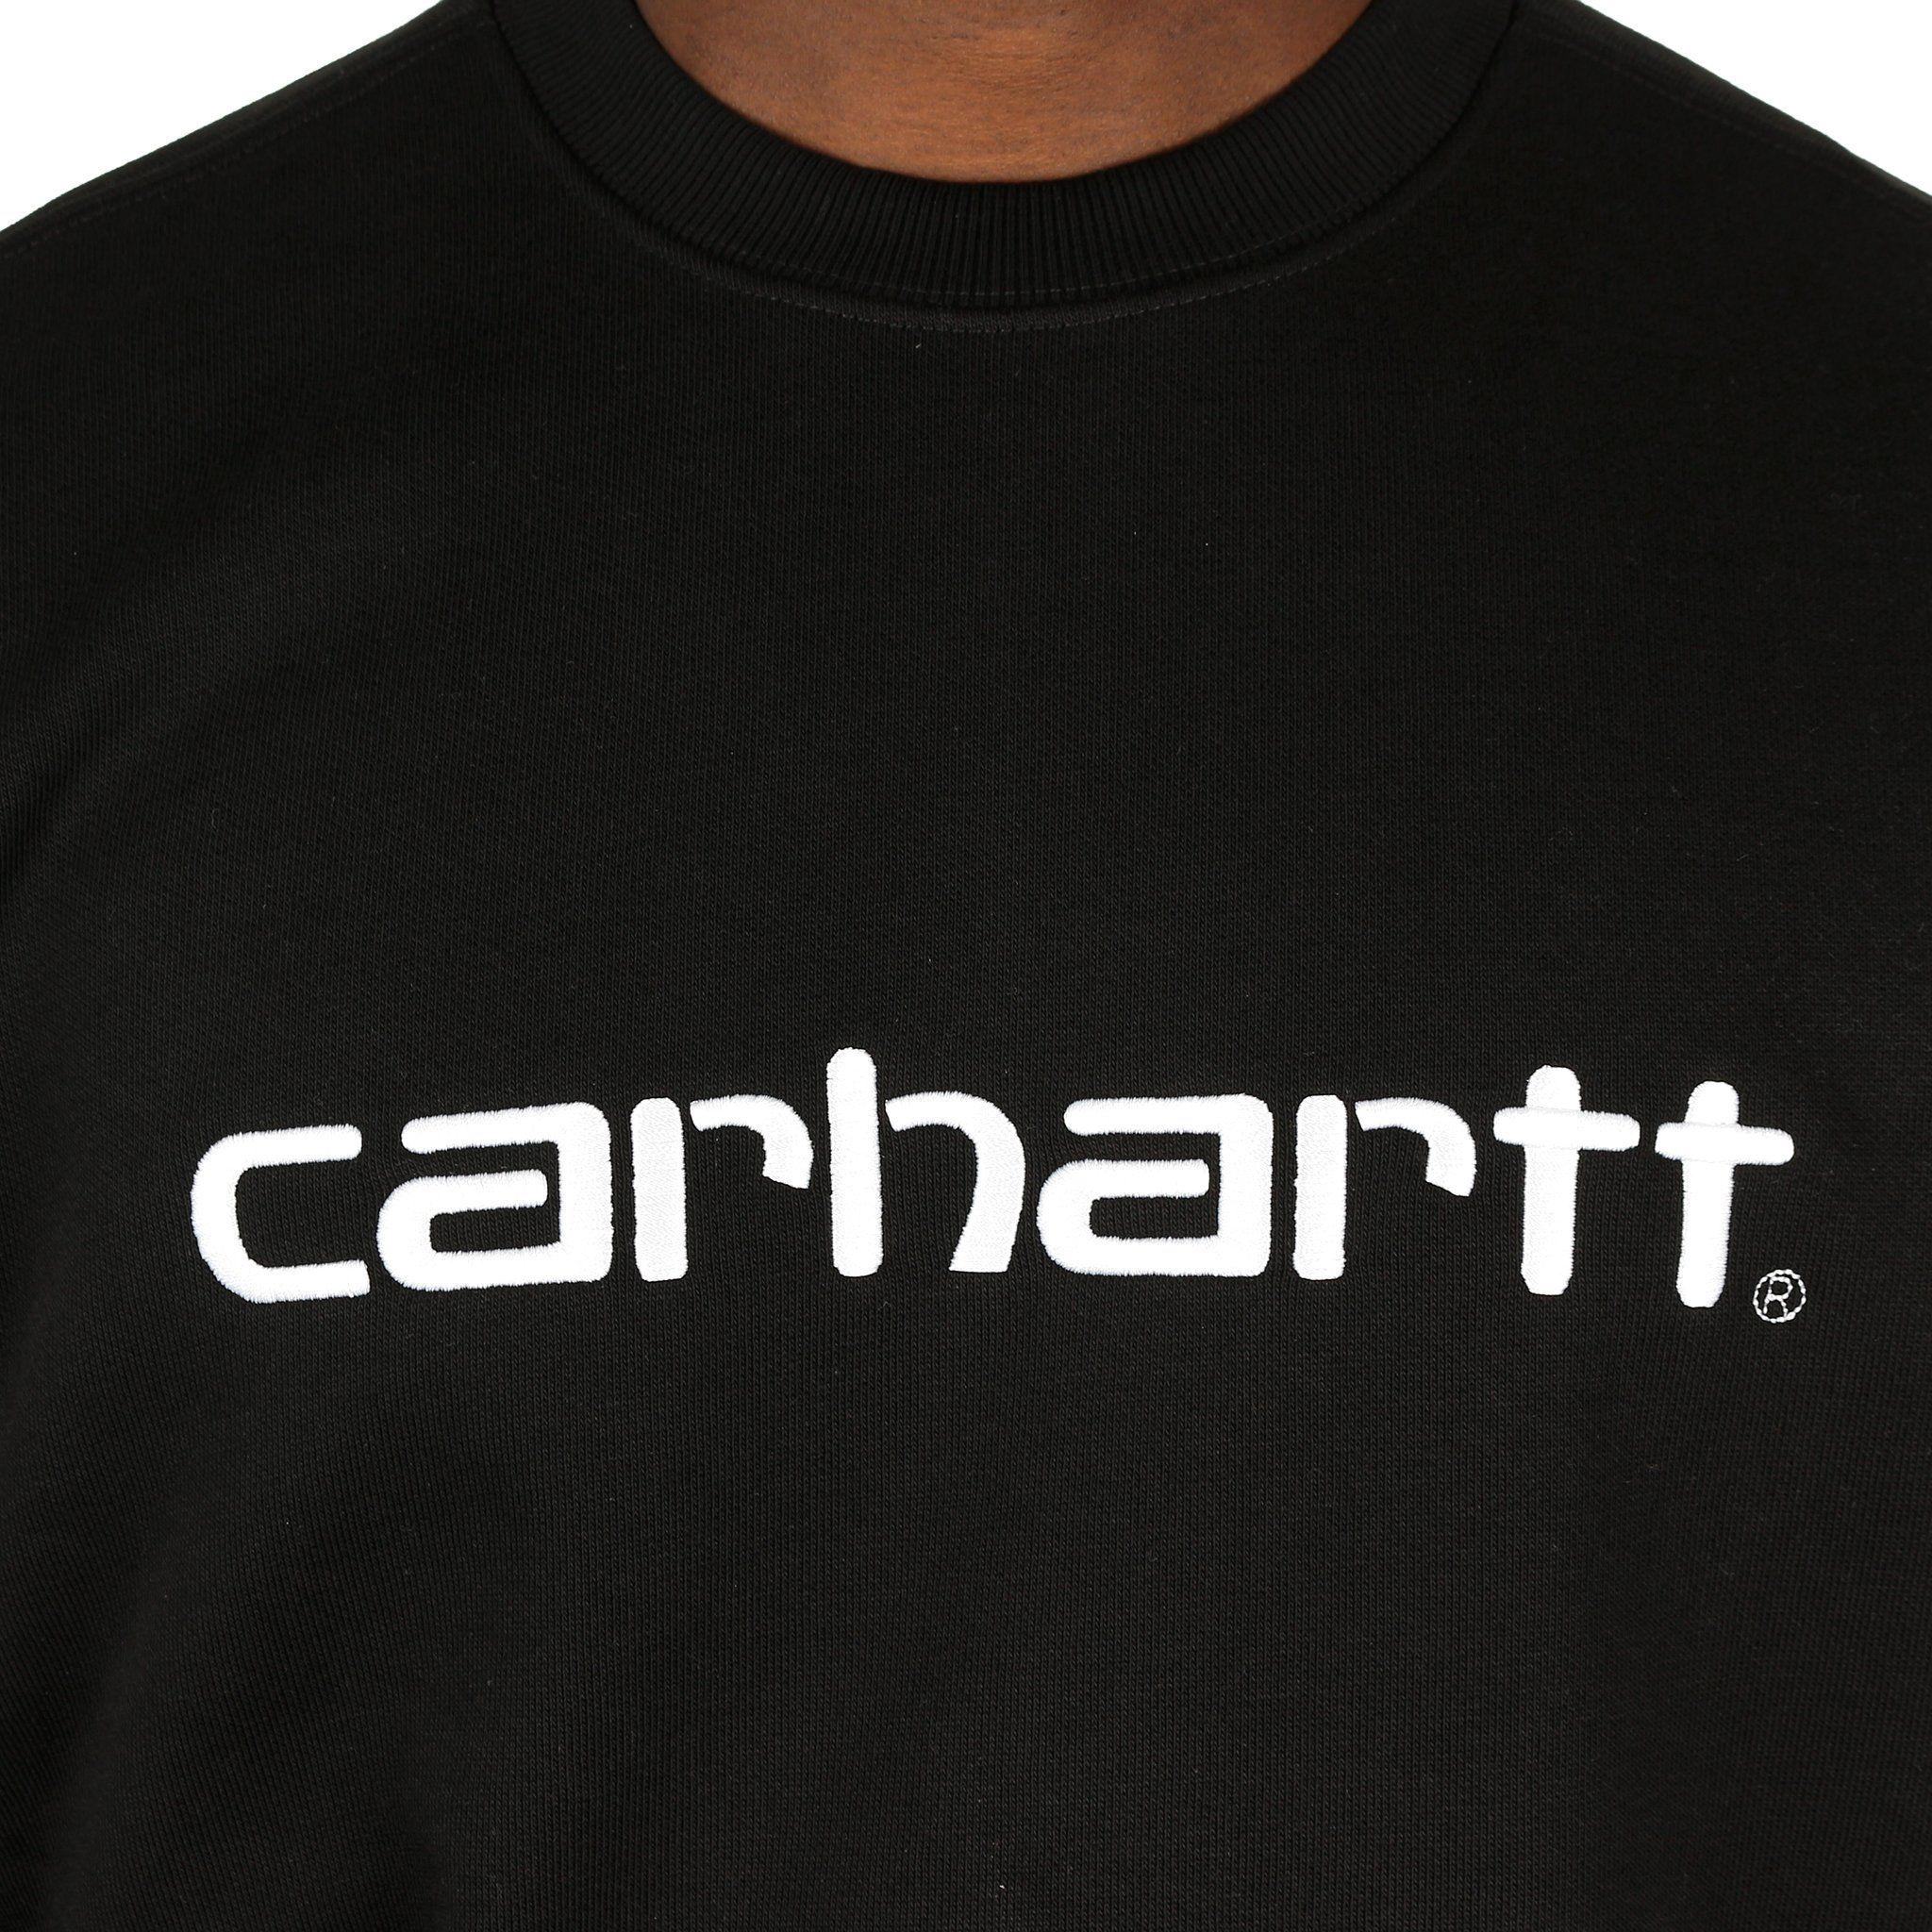 Carrhart Logo - Carhartt Logo Sweat / White